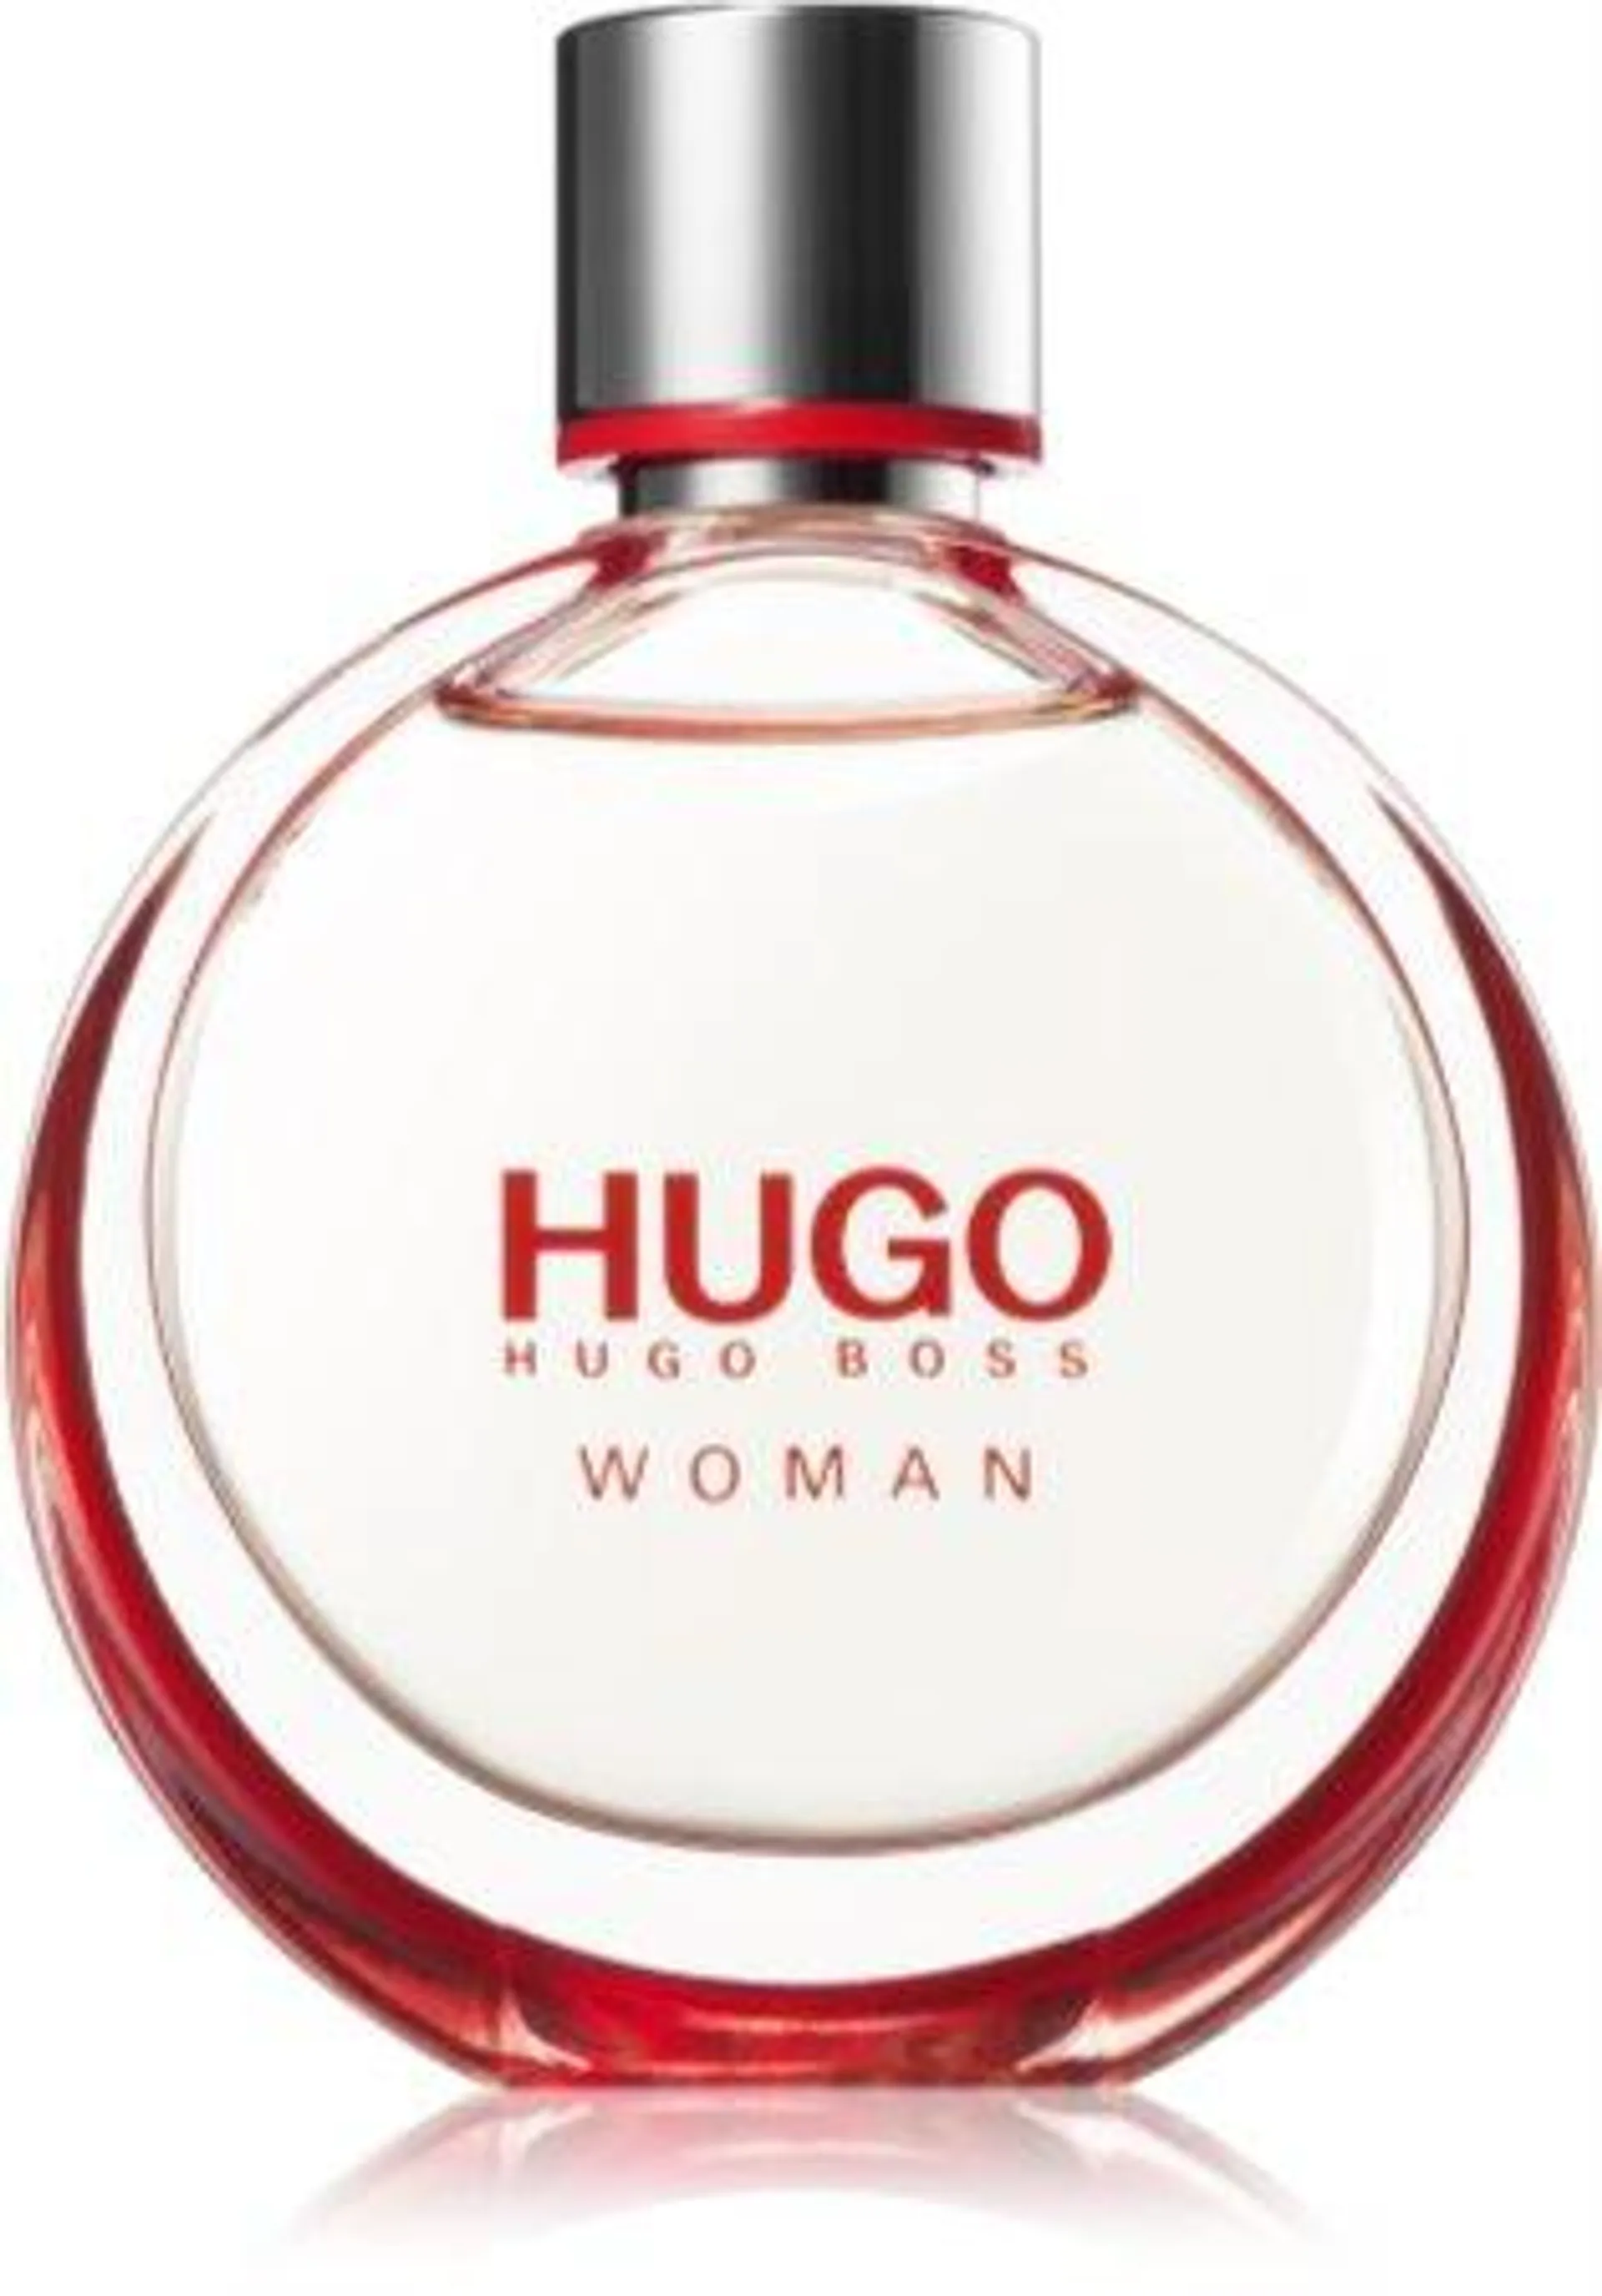 Hugo Boss HUGO Woman